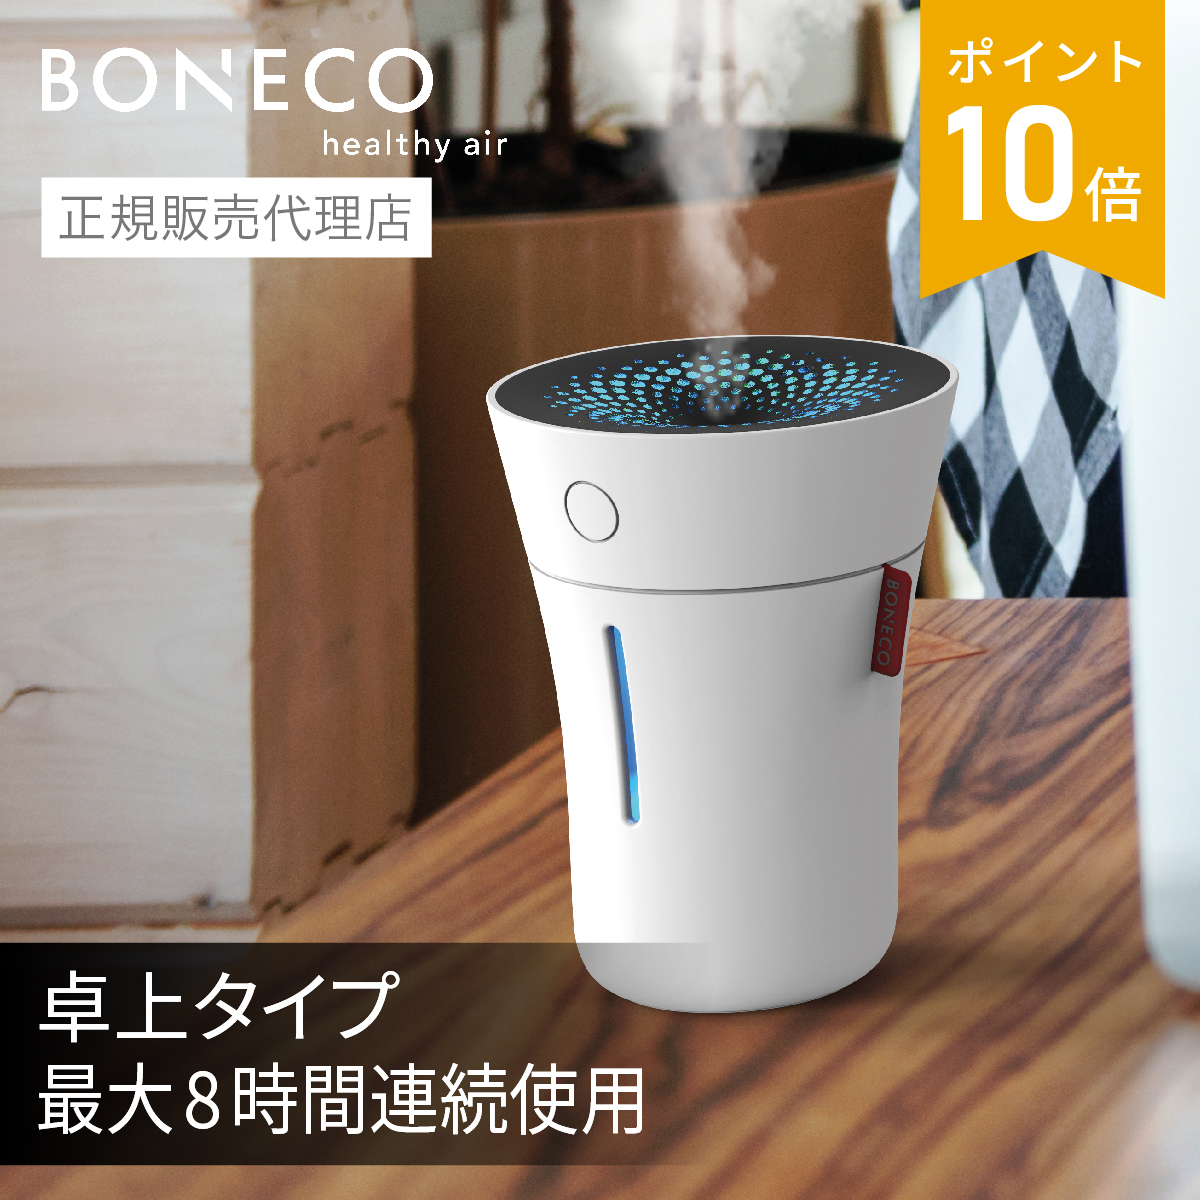 BONECO HEALTHY AIR 気化式加湿器 W200 大容量4.5L/10畳/気化式